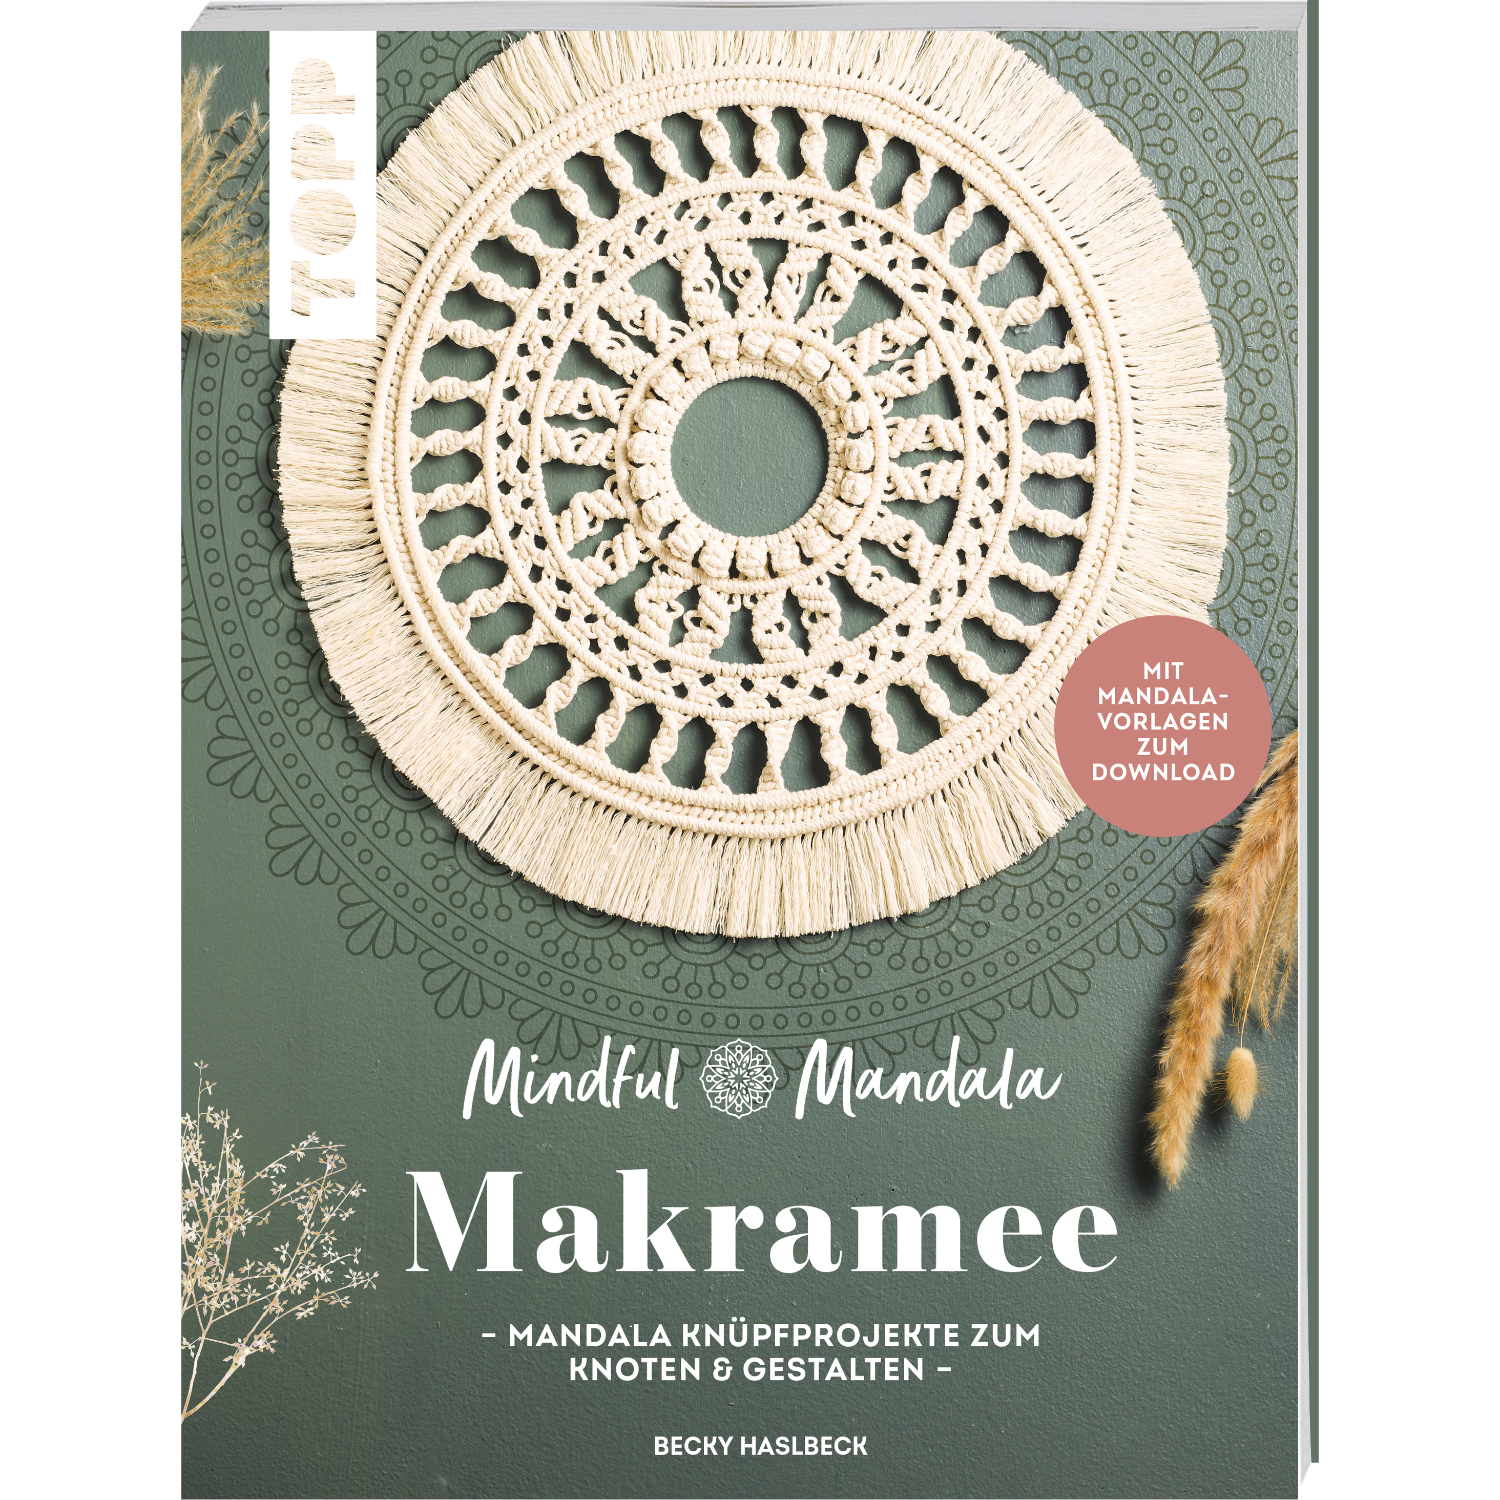 Mindful Mandala-Makramee